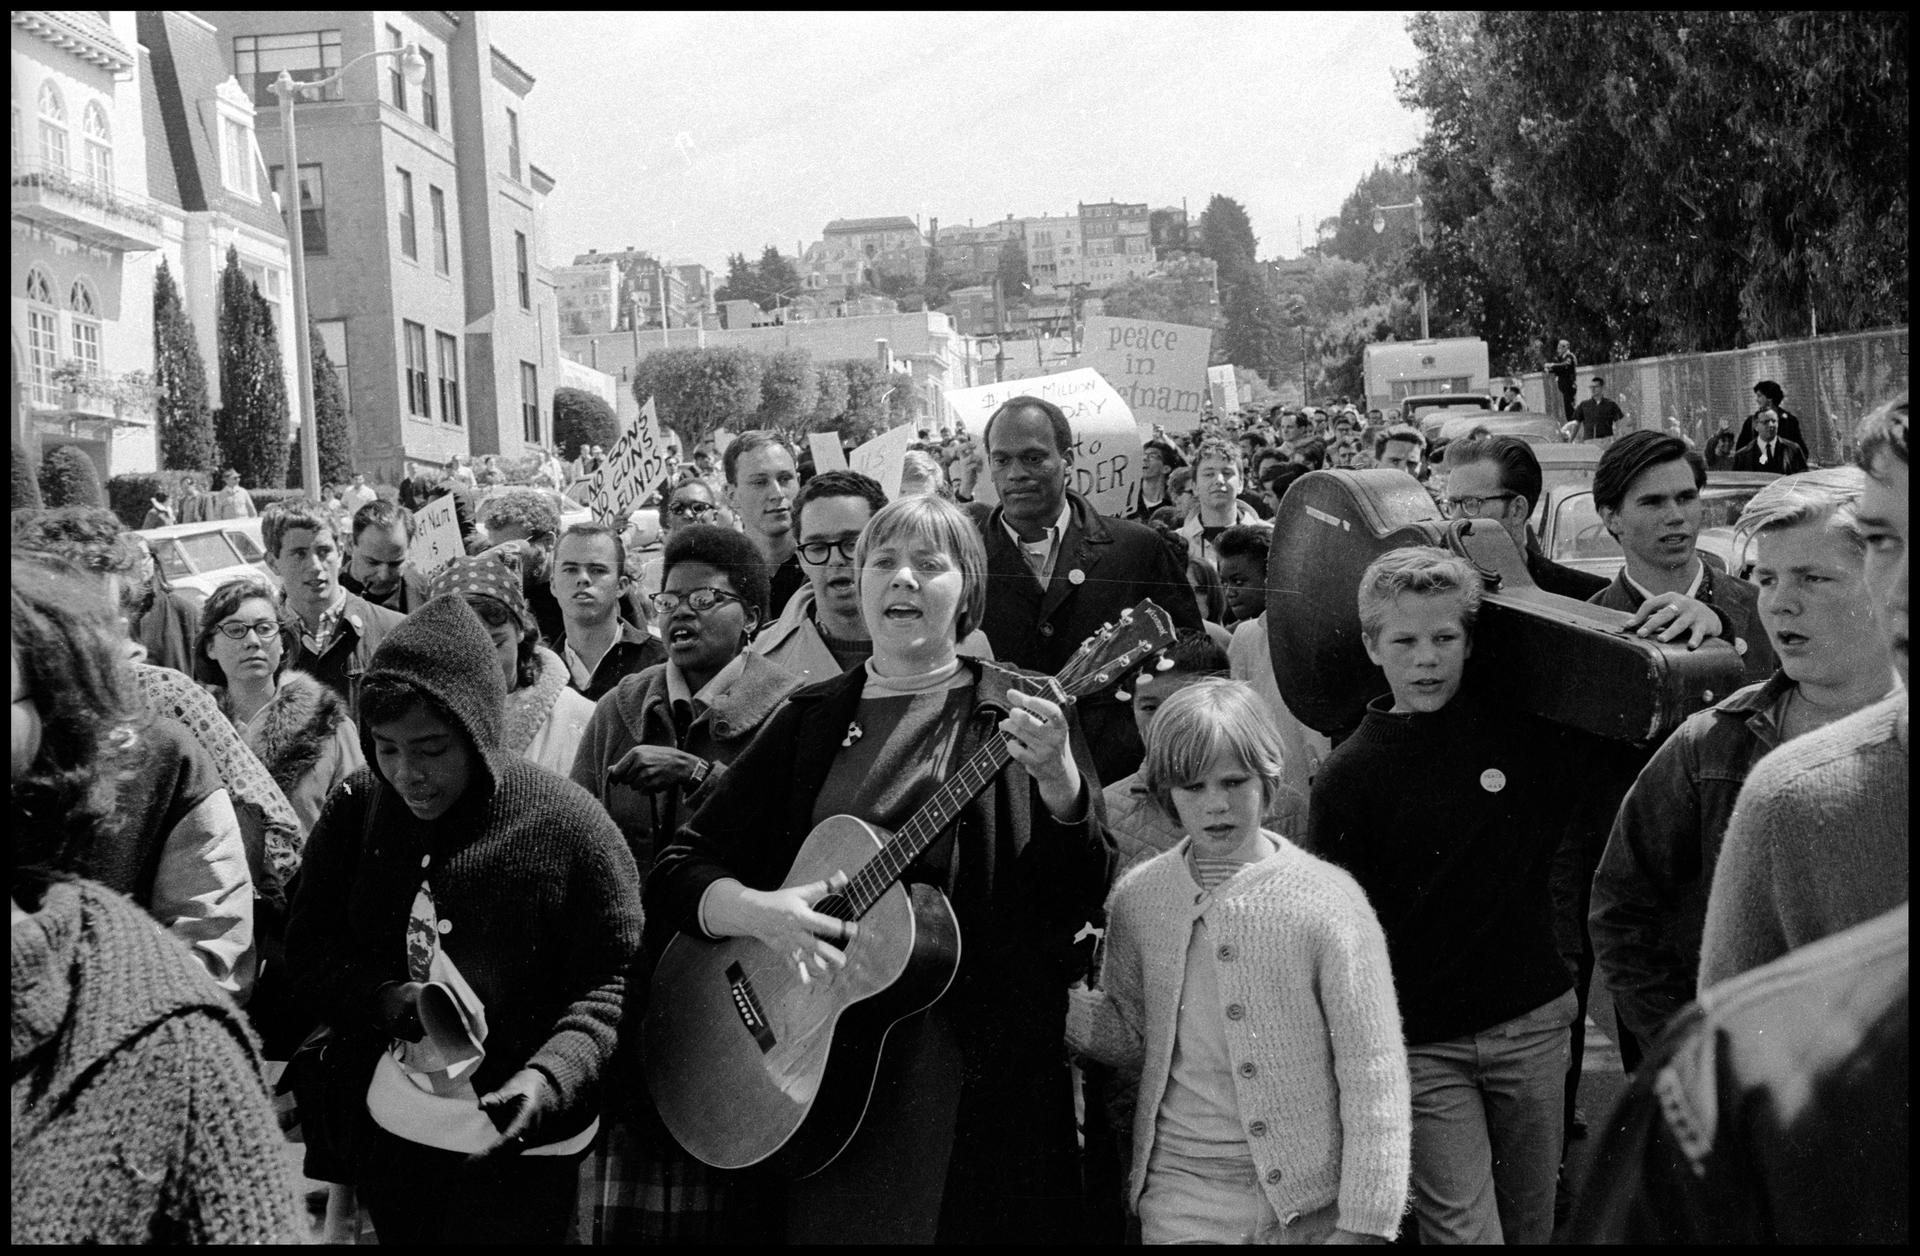 Barbara Dane singing at a protest in 1964.